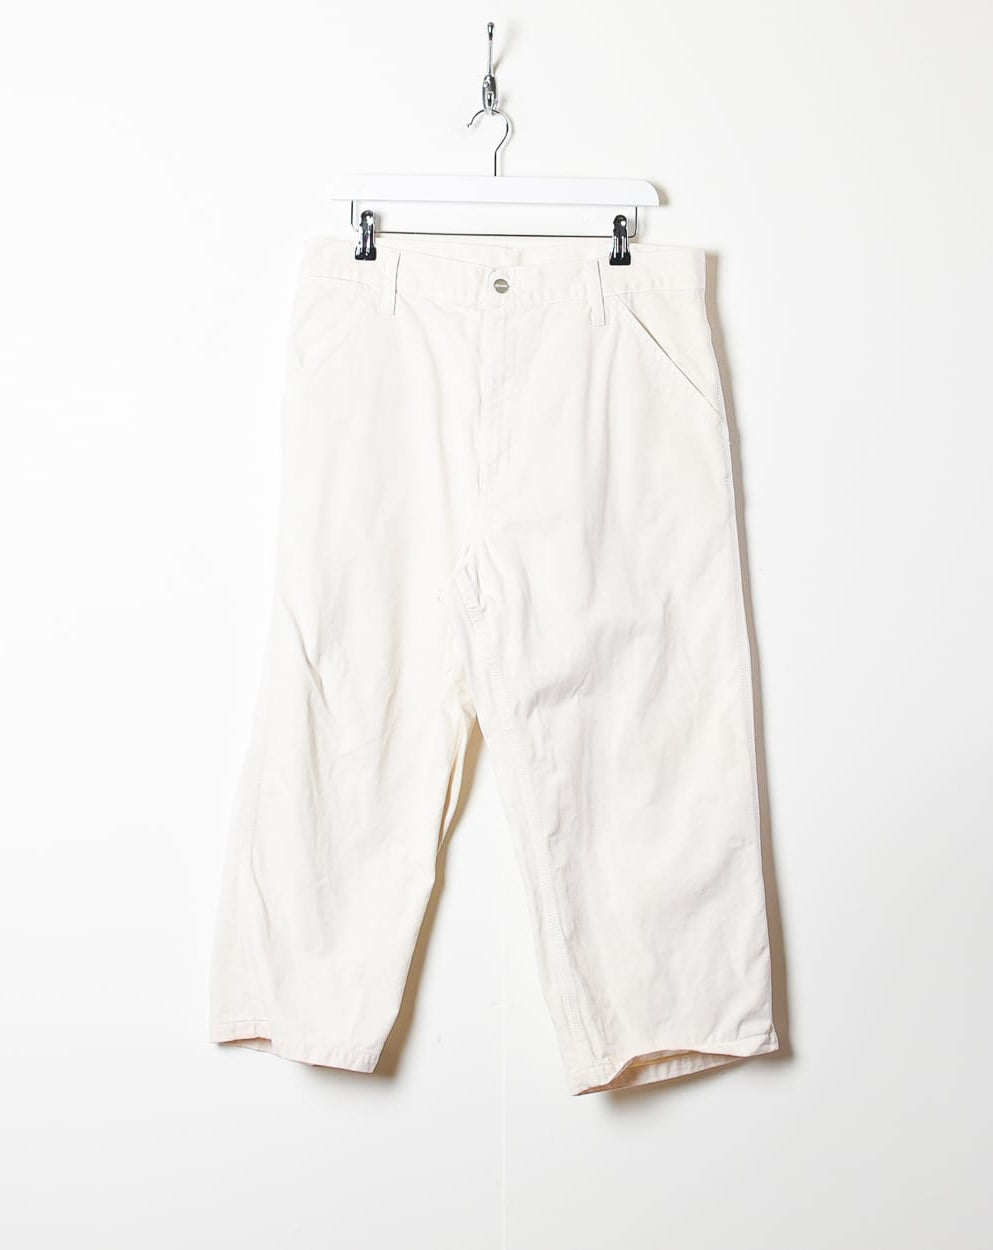 White Carhartt 3/4 Length Jeans - W34 L23